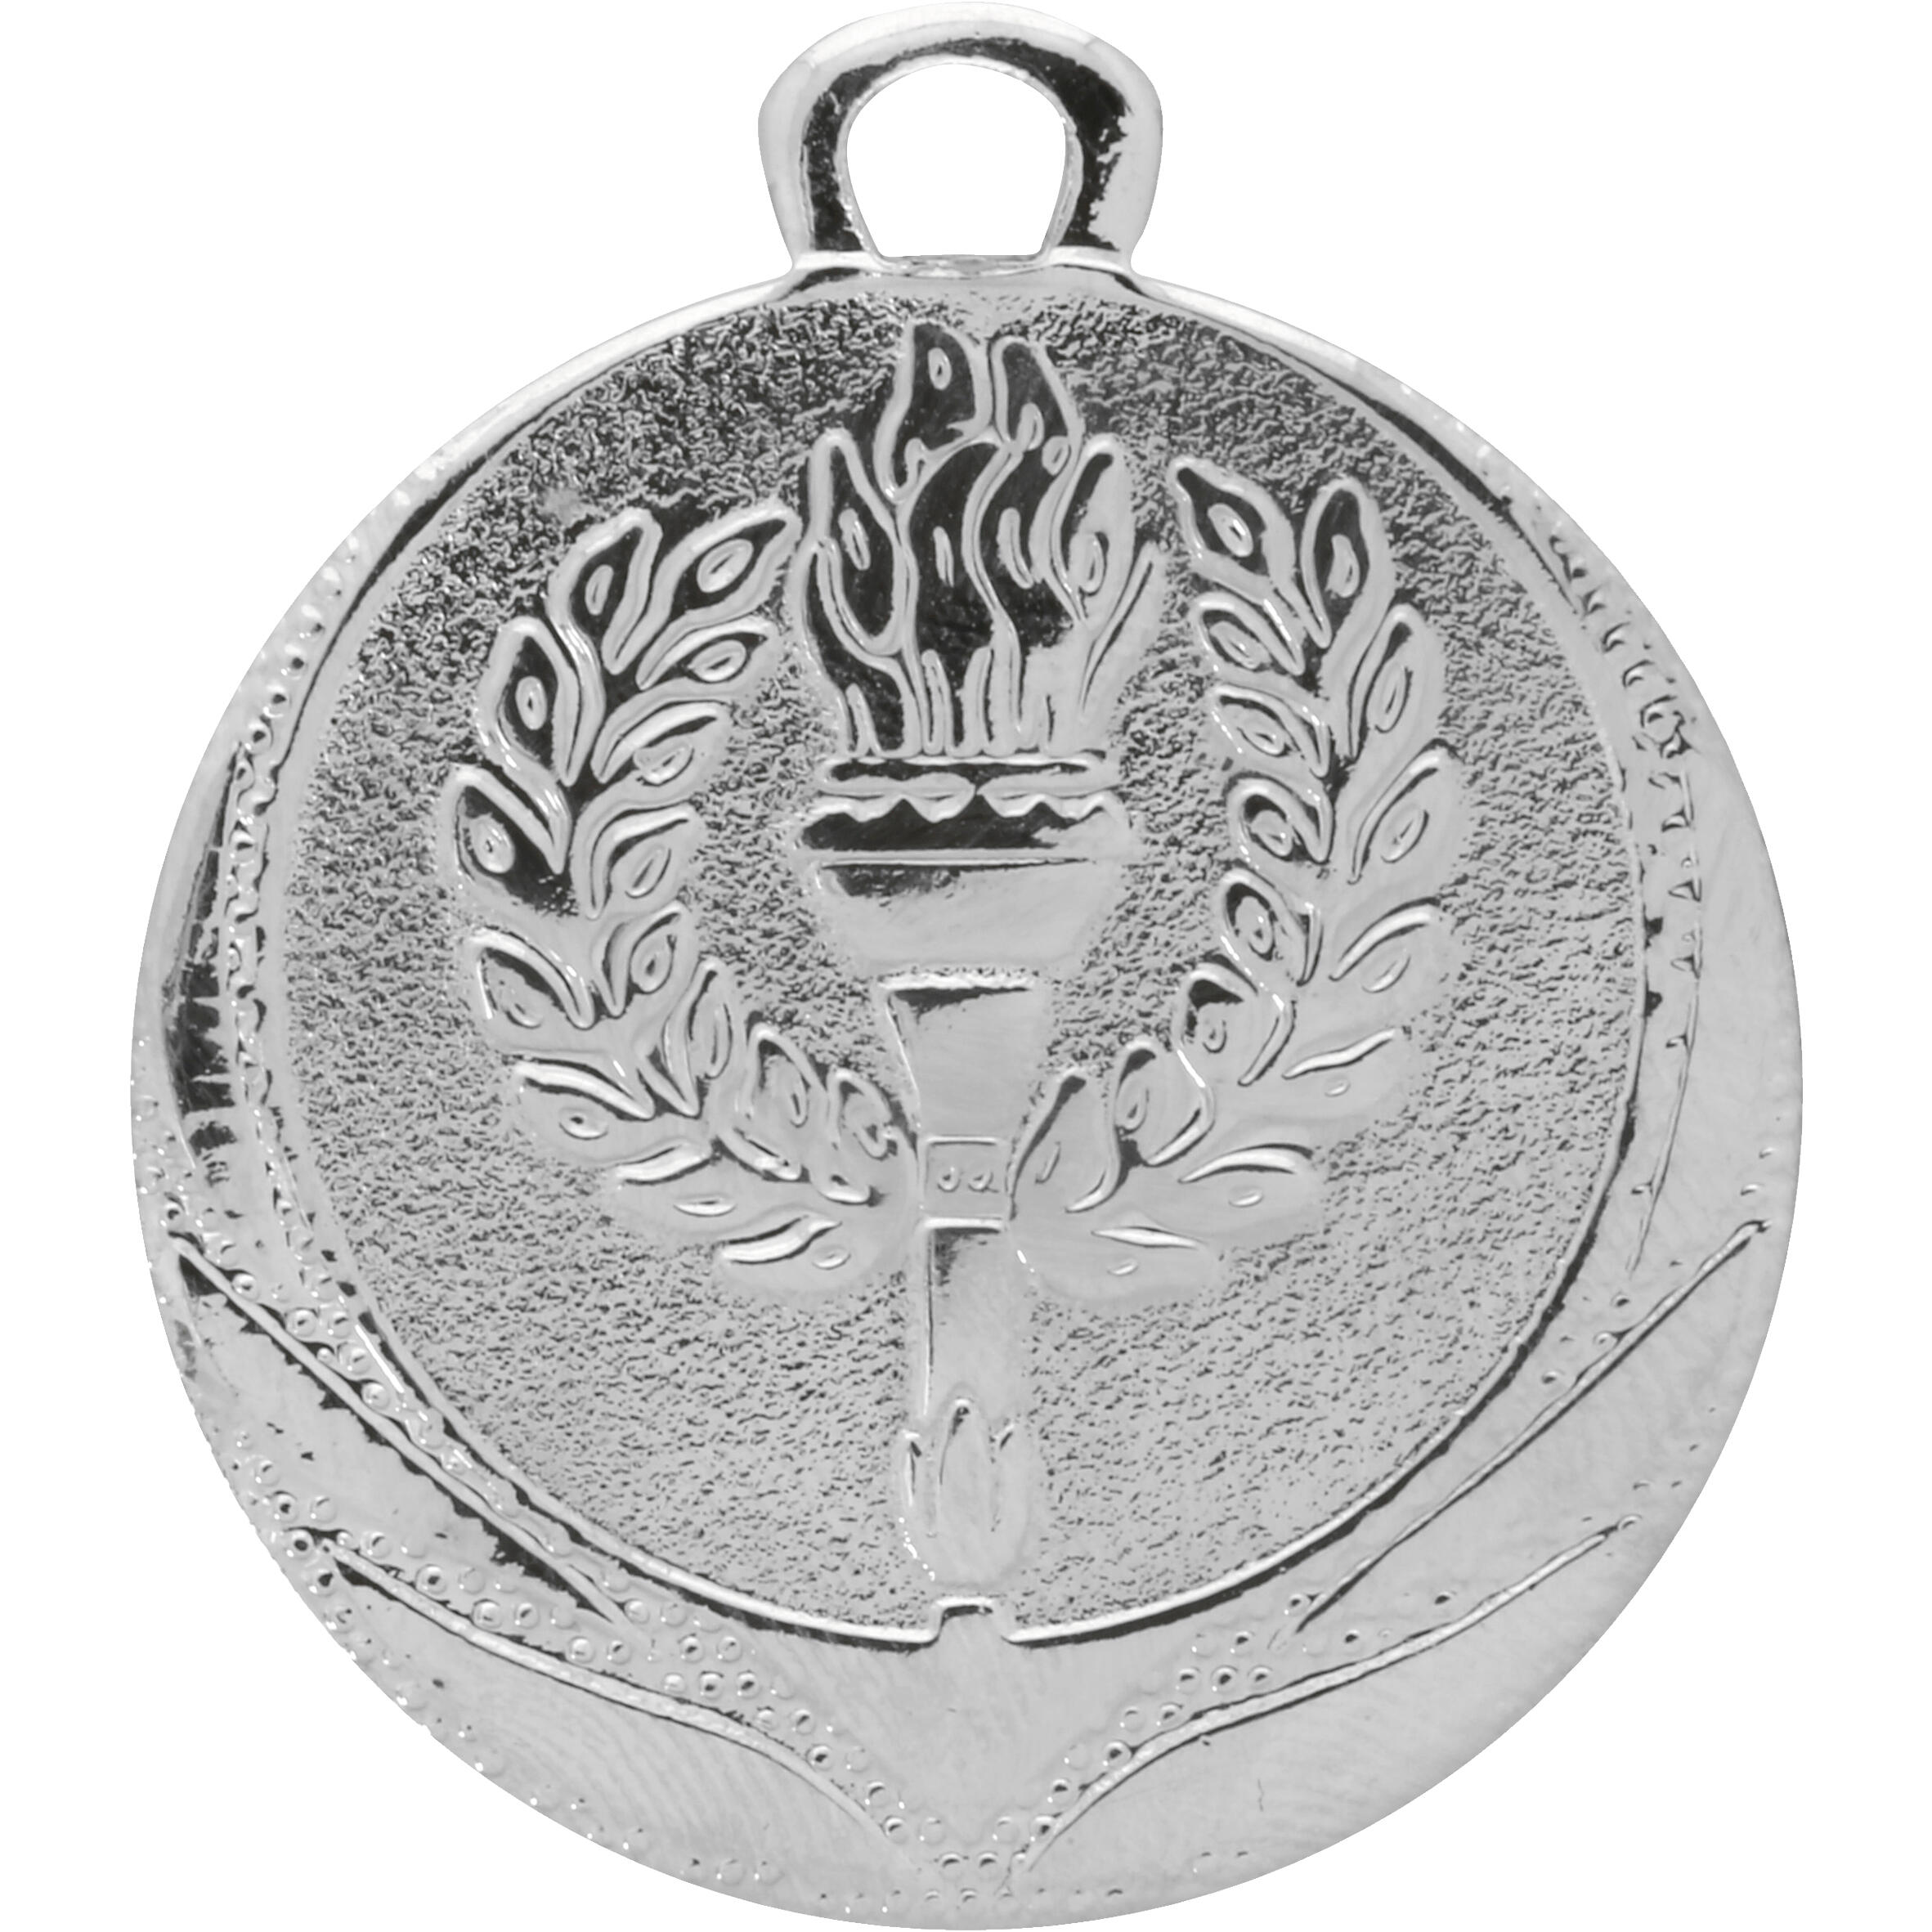 Schottland 24x bedruckt Pokal Medaille Einsätze Flach oder Gewölbt 25mm 